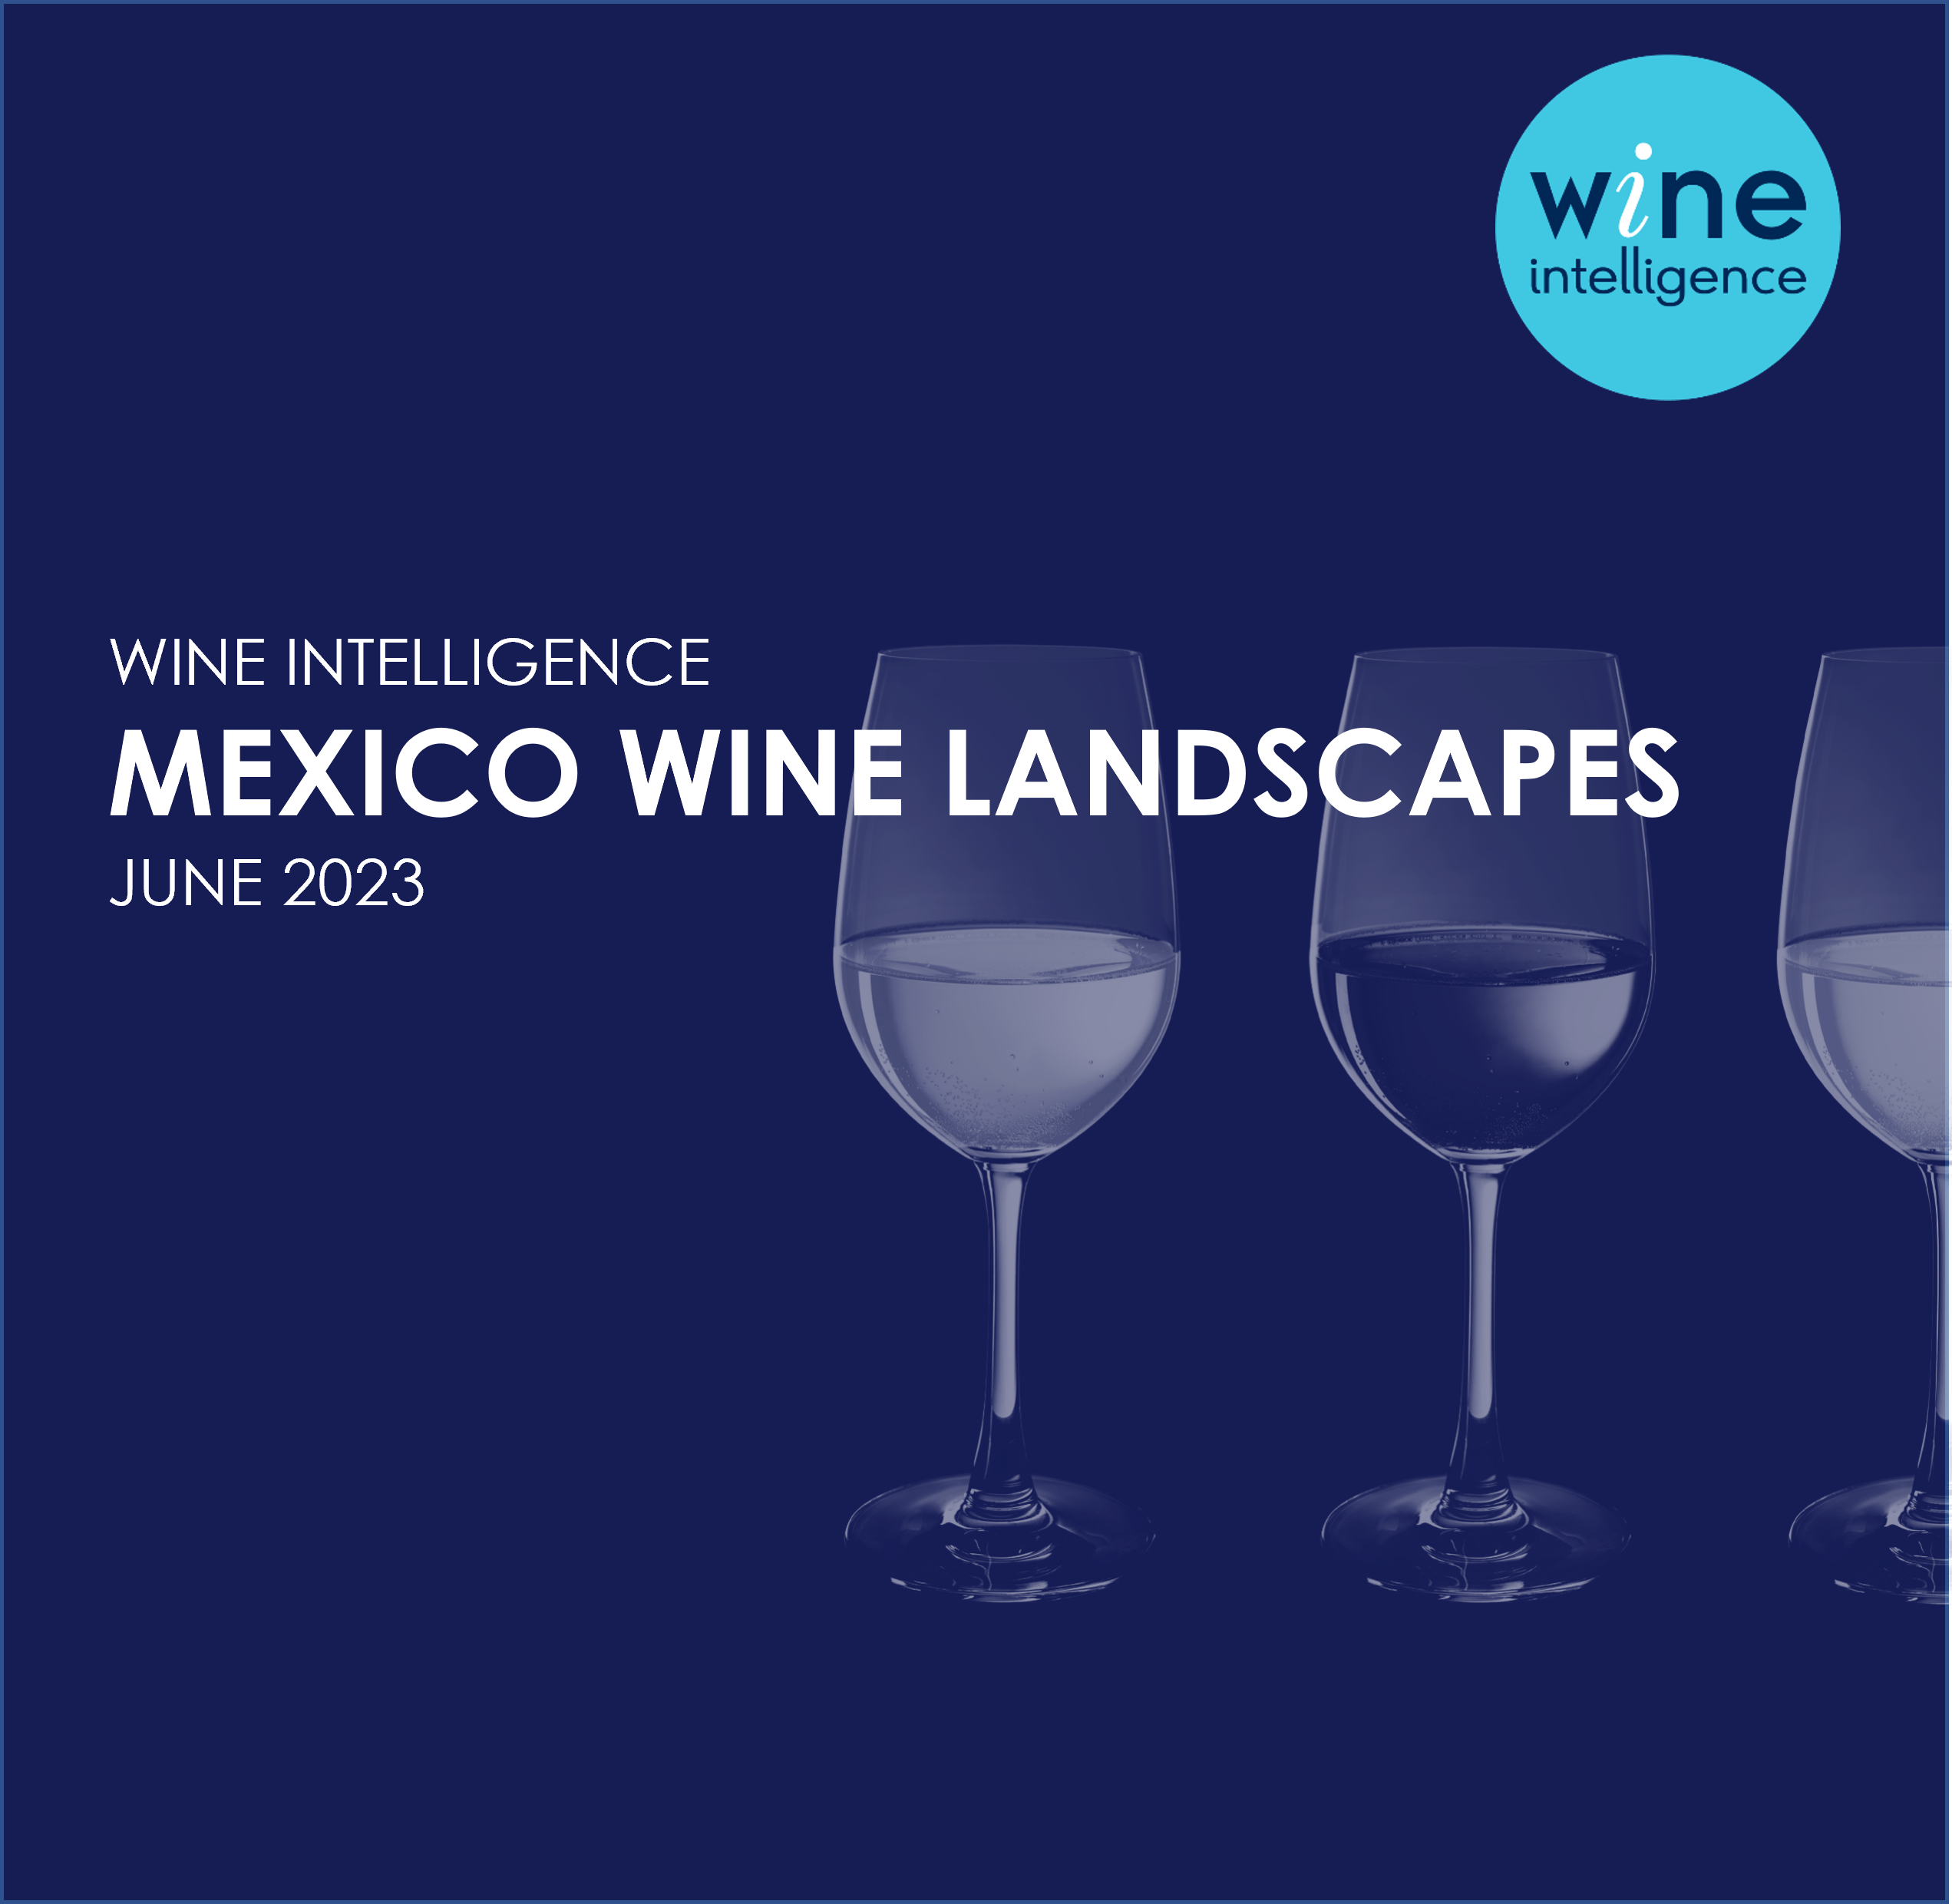 Mexico Wine Landscapes thumbnail 2023 - Mexico Wine Landscapes Report 2023